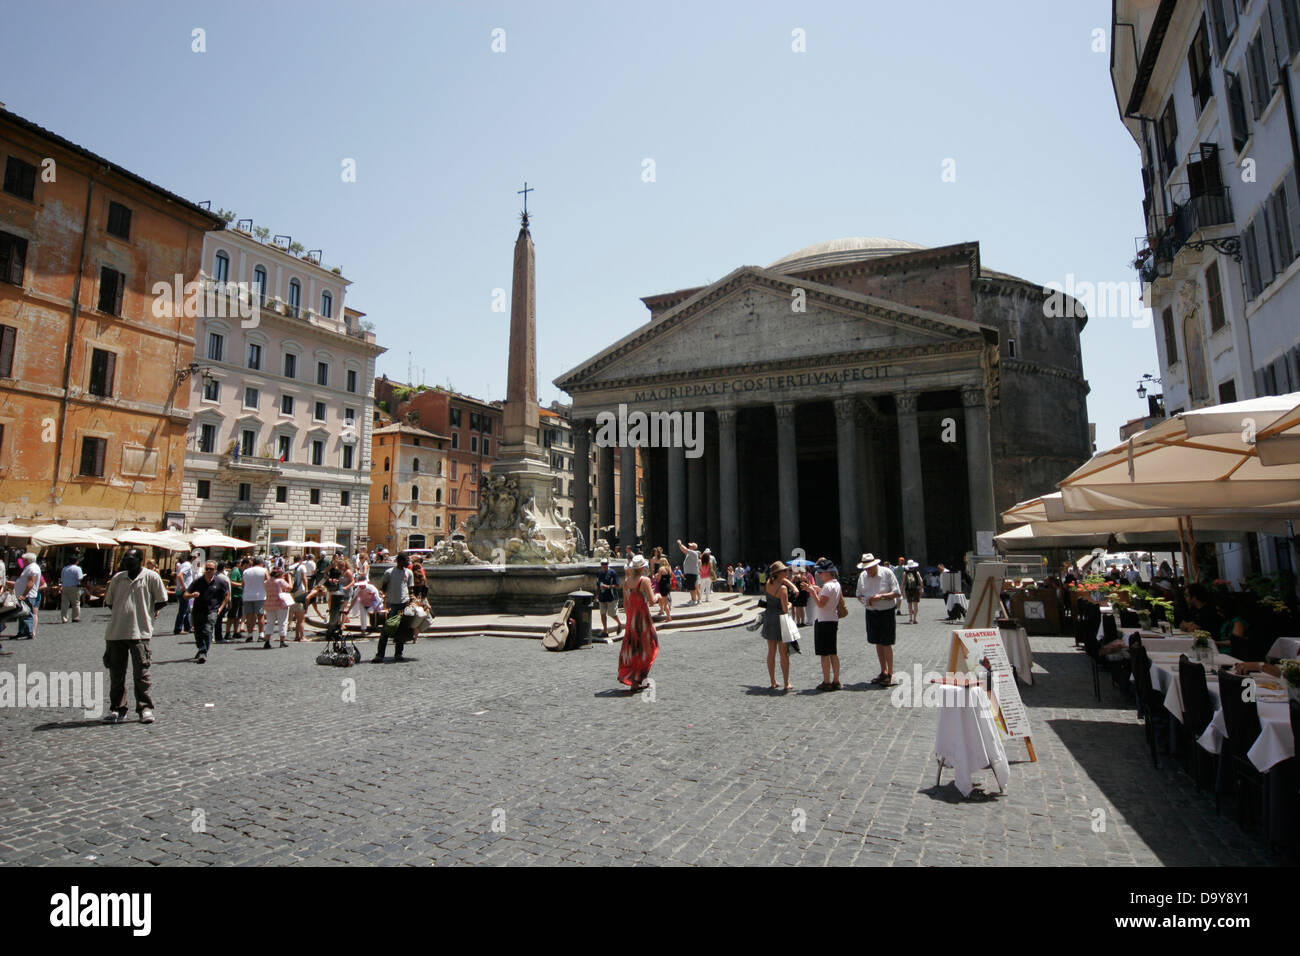 Outdoor cafe near the Pantheon on Piazza della Rotonda, Rome, Italy Stock Photo